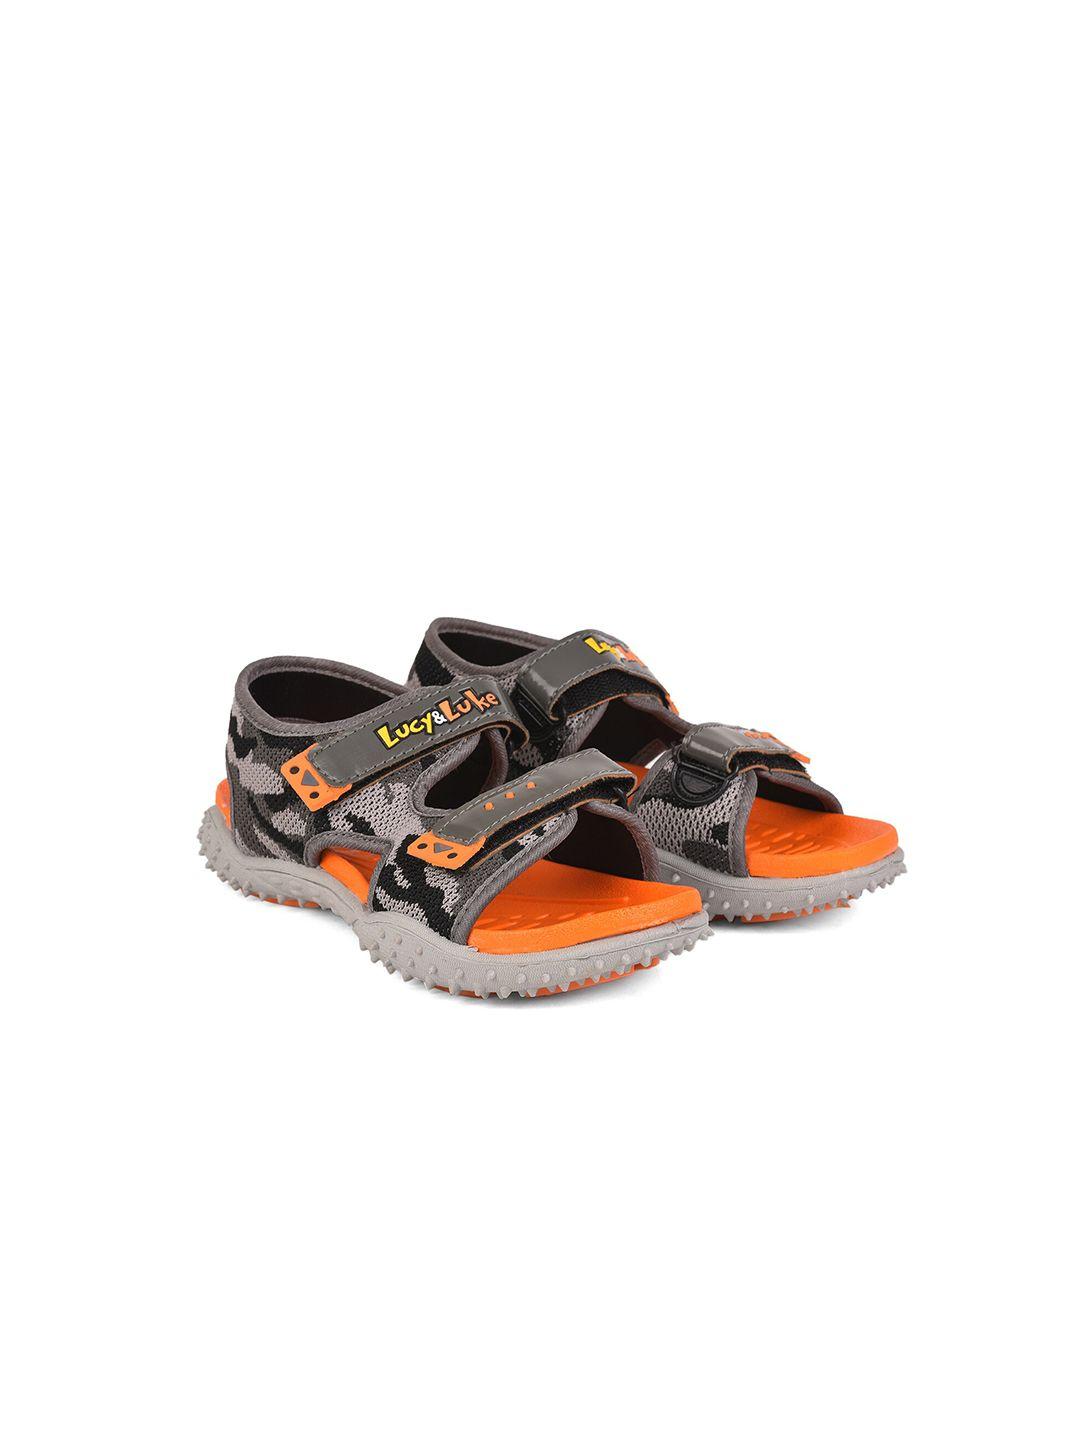 liberty unisex kids orange & grey comfort sandals